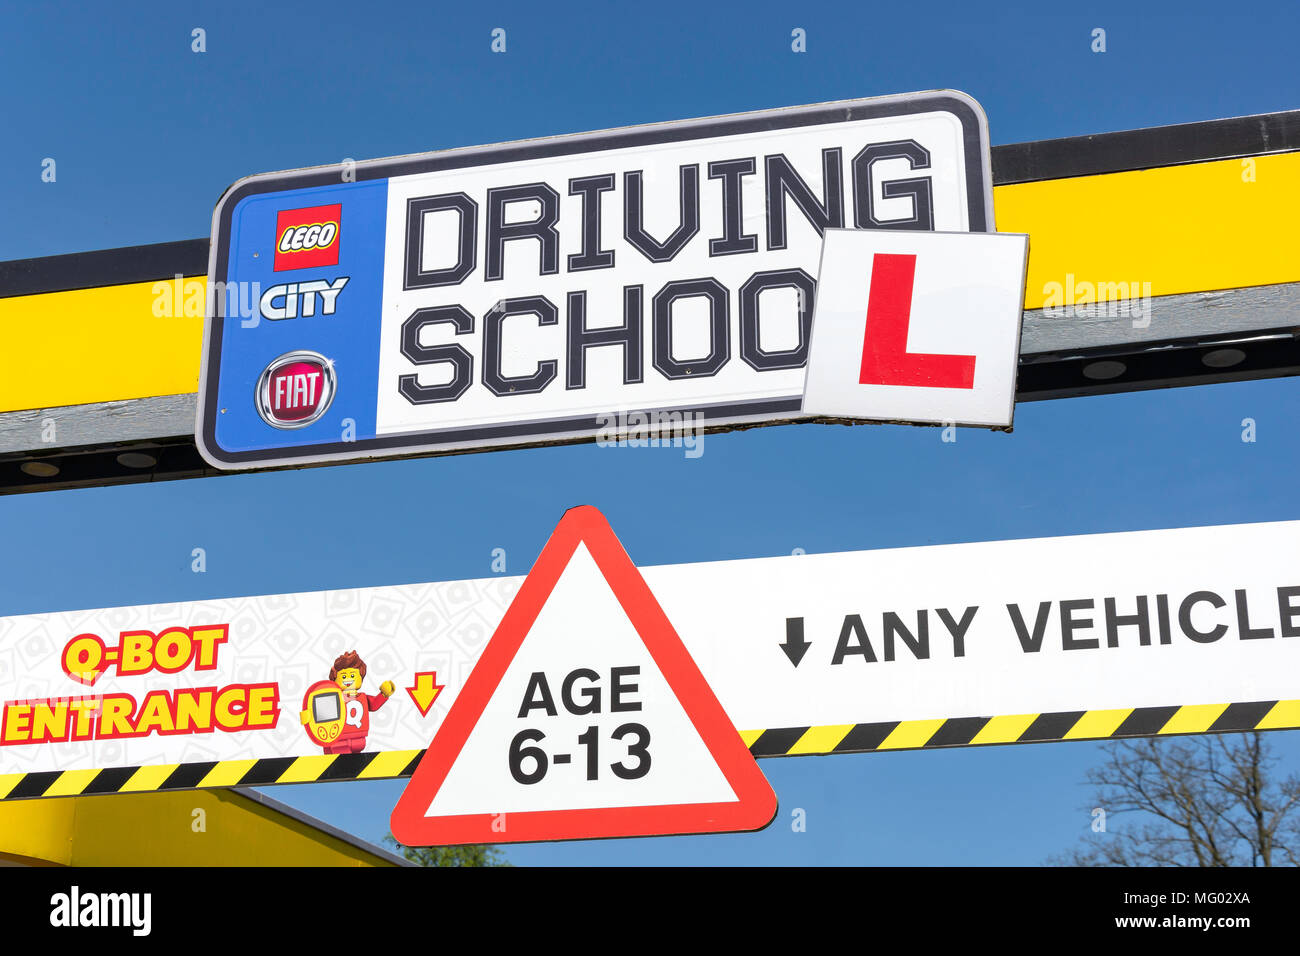 Lego City Driving School sign, Legoland Windsor Resort, Windsor, Berkshire, England, United Kingdom Stock Photo